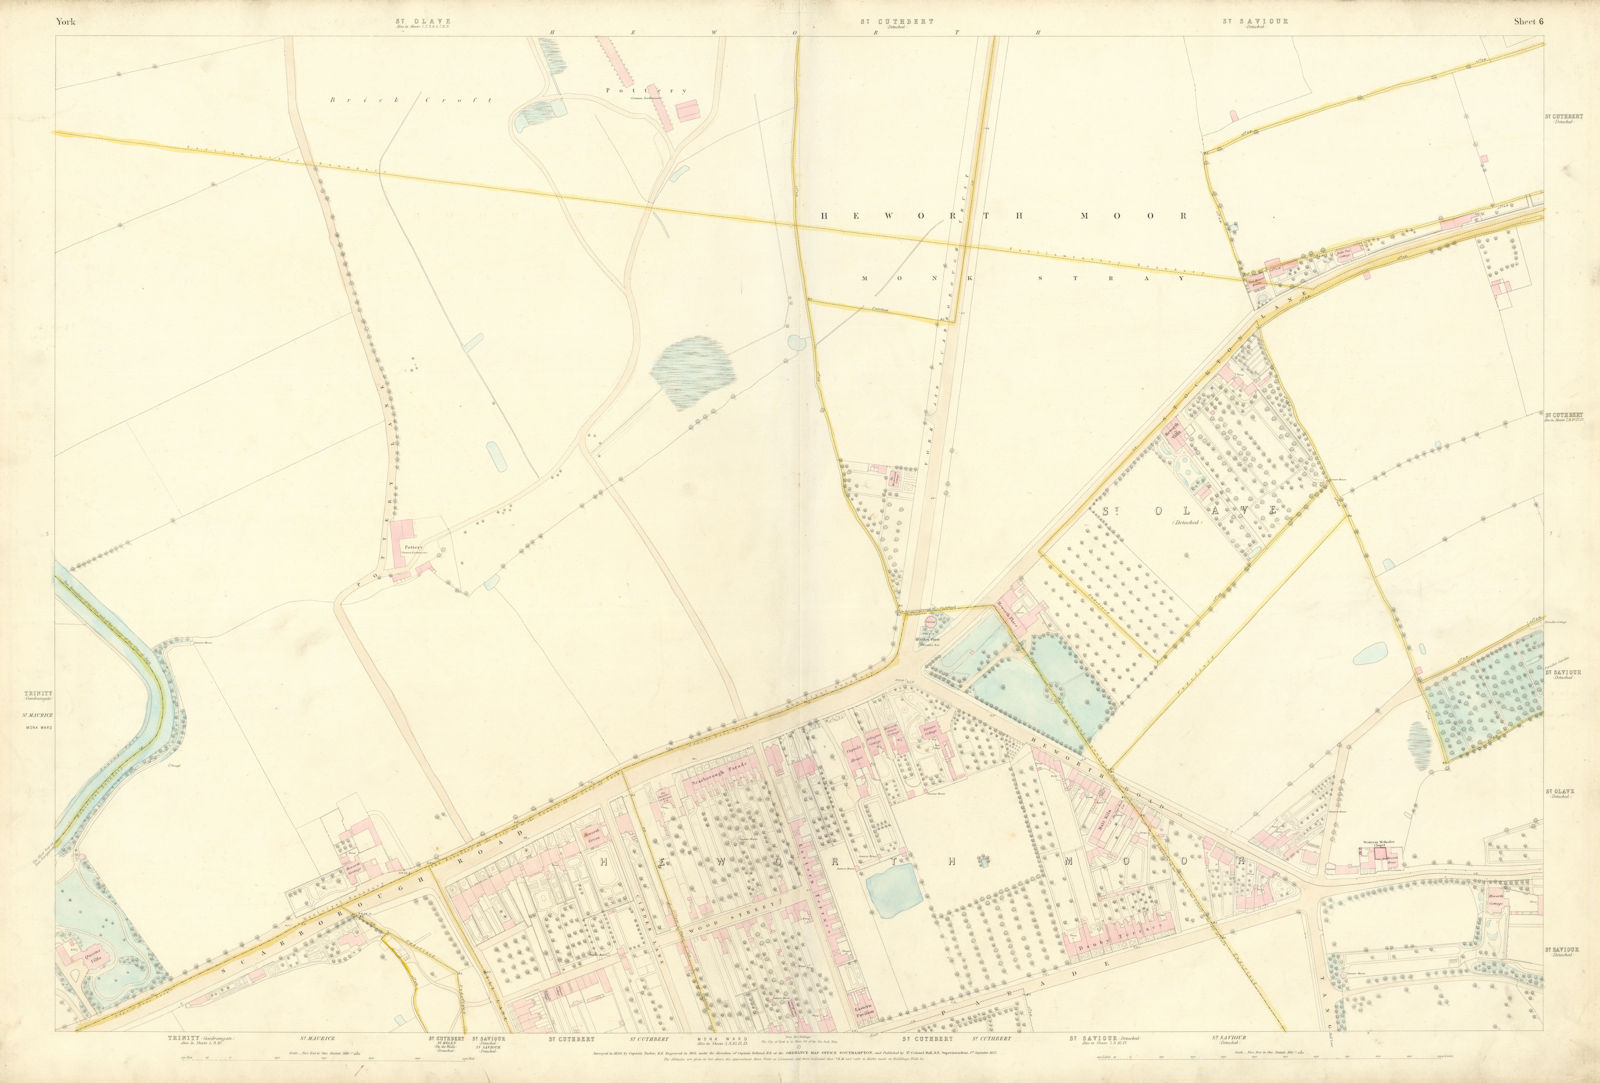 City of York #6 Heworth Monk Stray Layerthorpe. Ordnance Survey 1852 old map